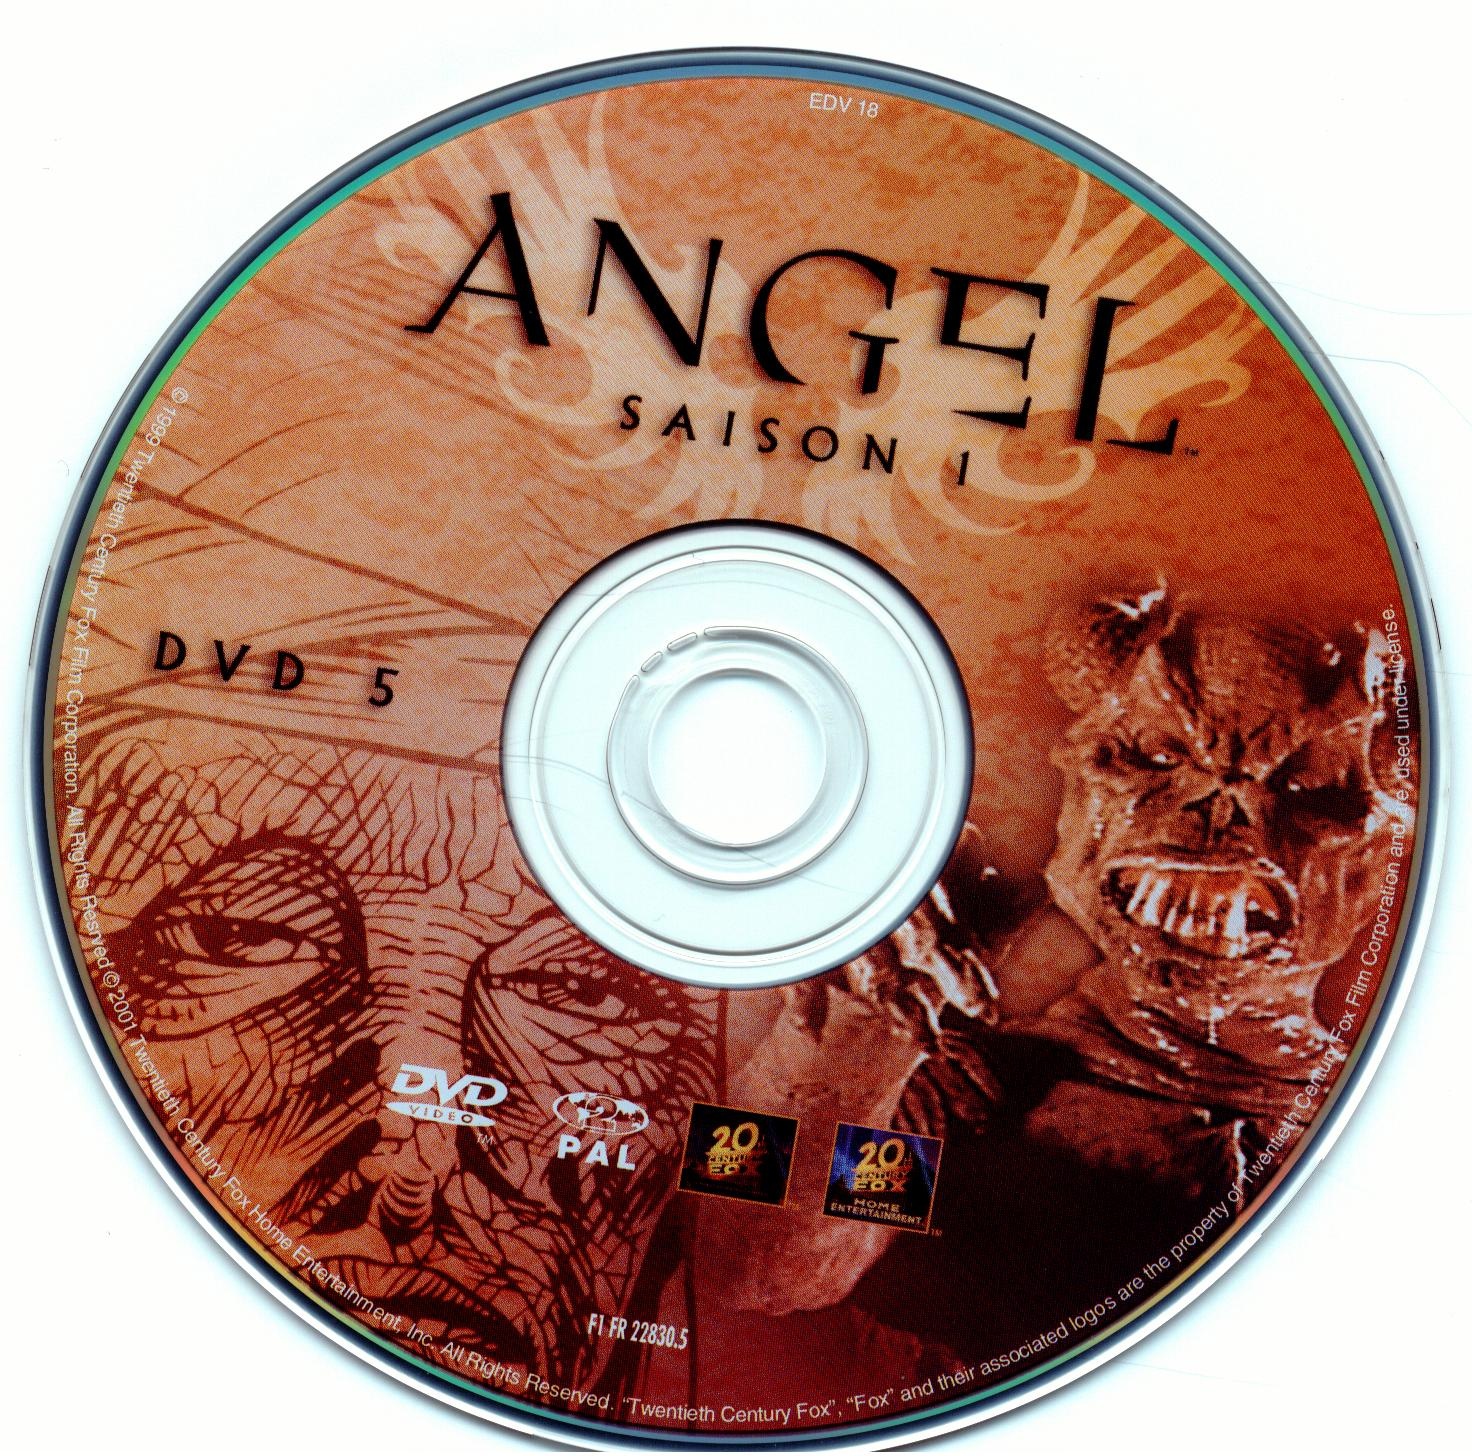 Angel Saison 1 dvd 5